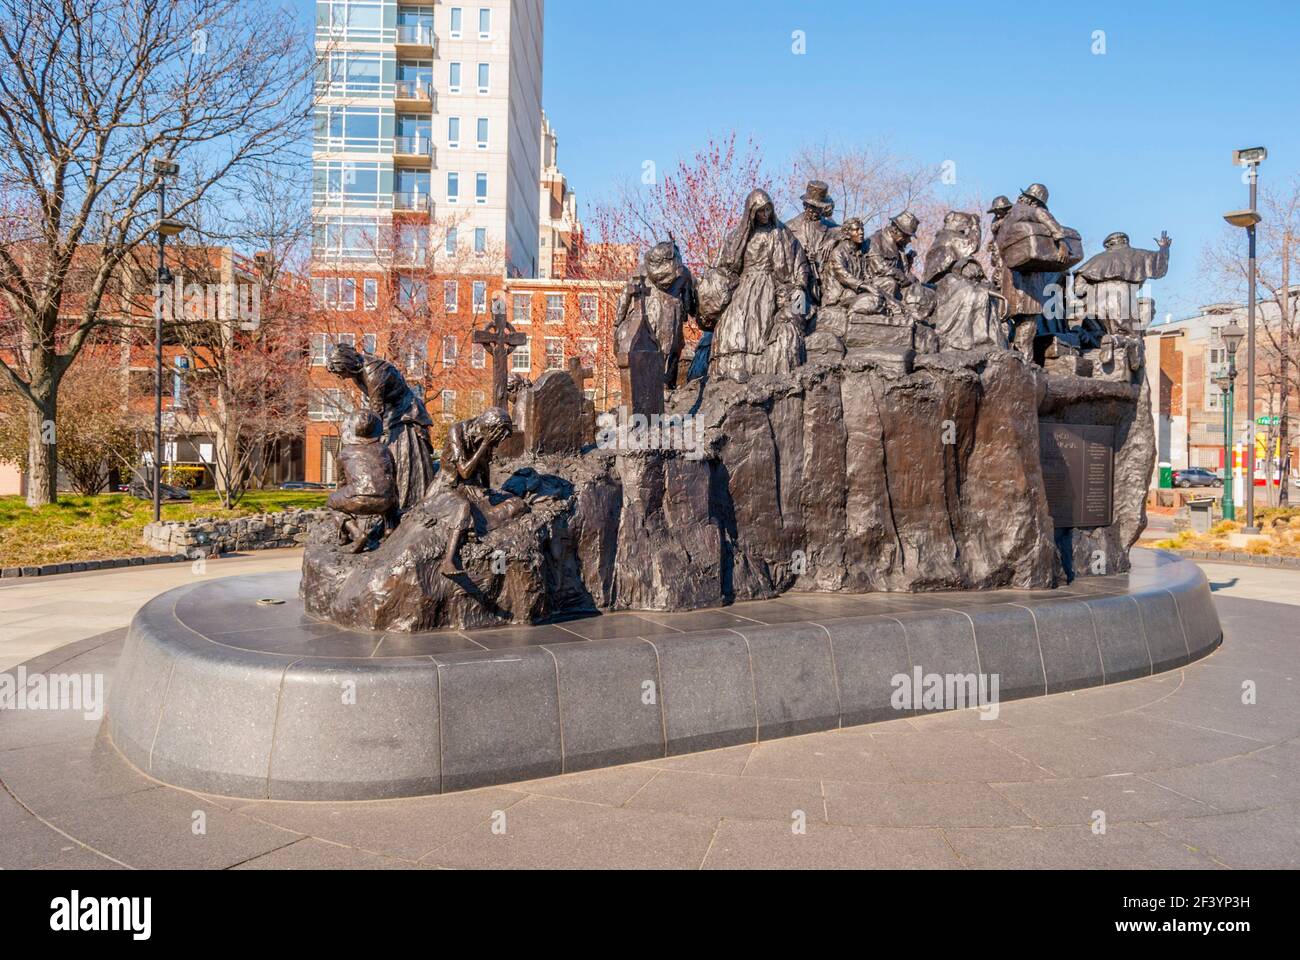 The Irish Memorial in I-95 Park commemorating The Irish immigrants, Philadelphia Pennsylvania Stock Photo